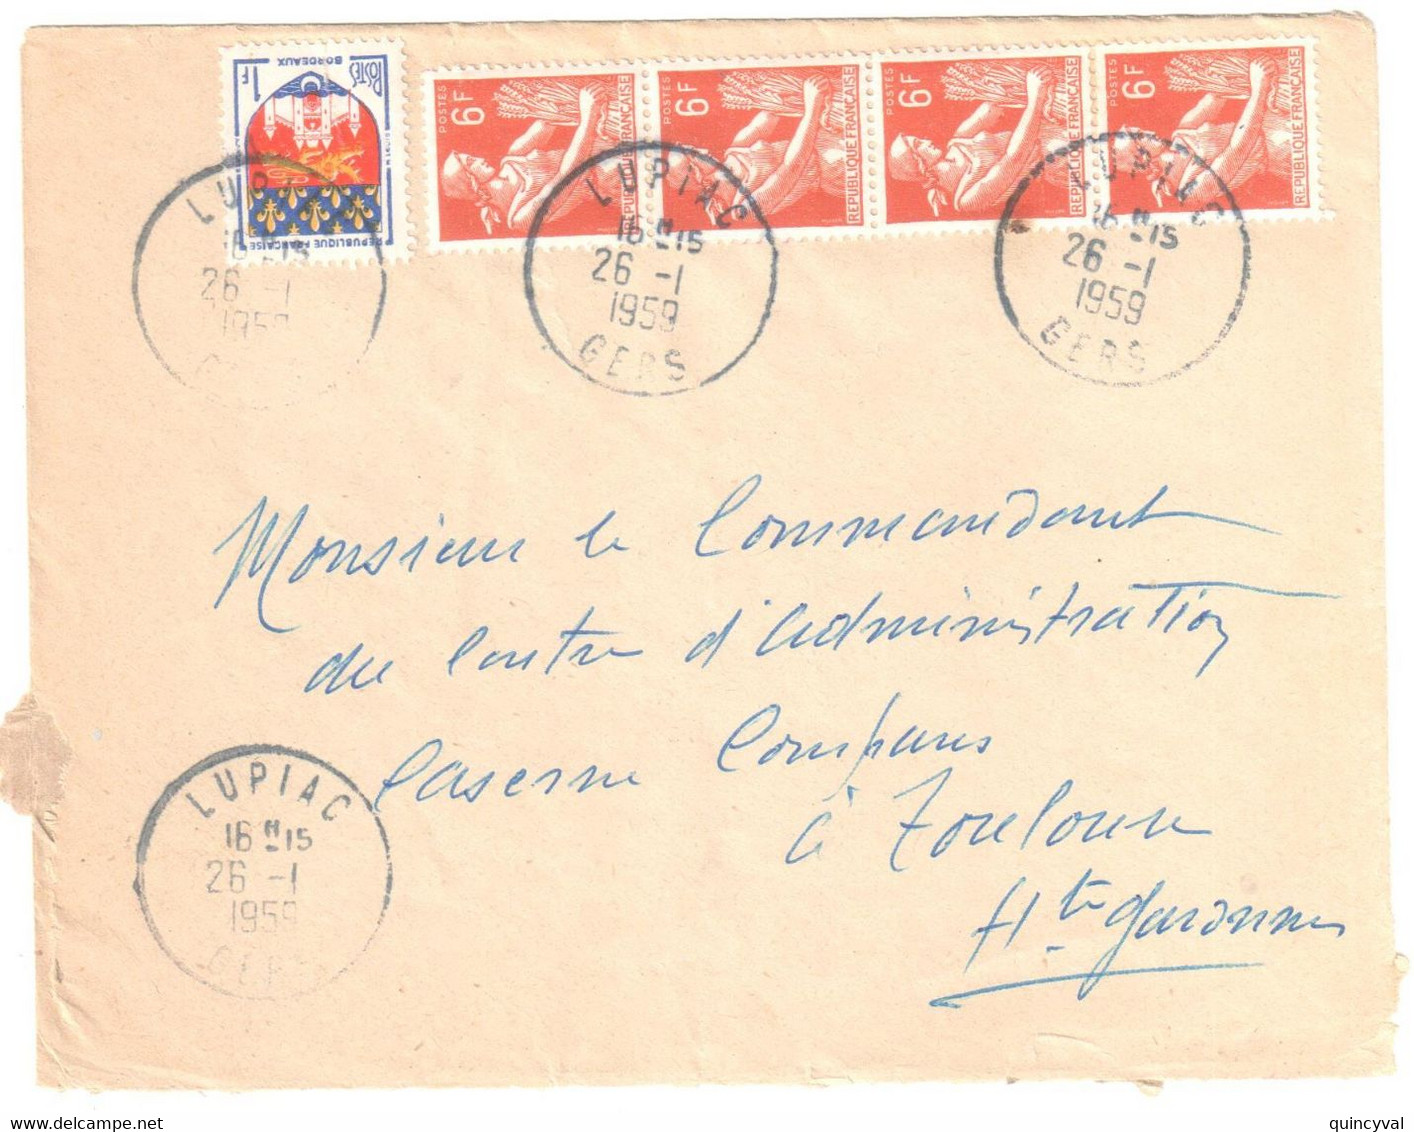 LUPIAC Gers Lettre 6 F Moissonneuse Bande De 4 1F Blason Bordeaux Ob 26 1 1959 Yv 1183 1115 - Covers & Documents